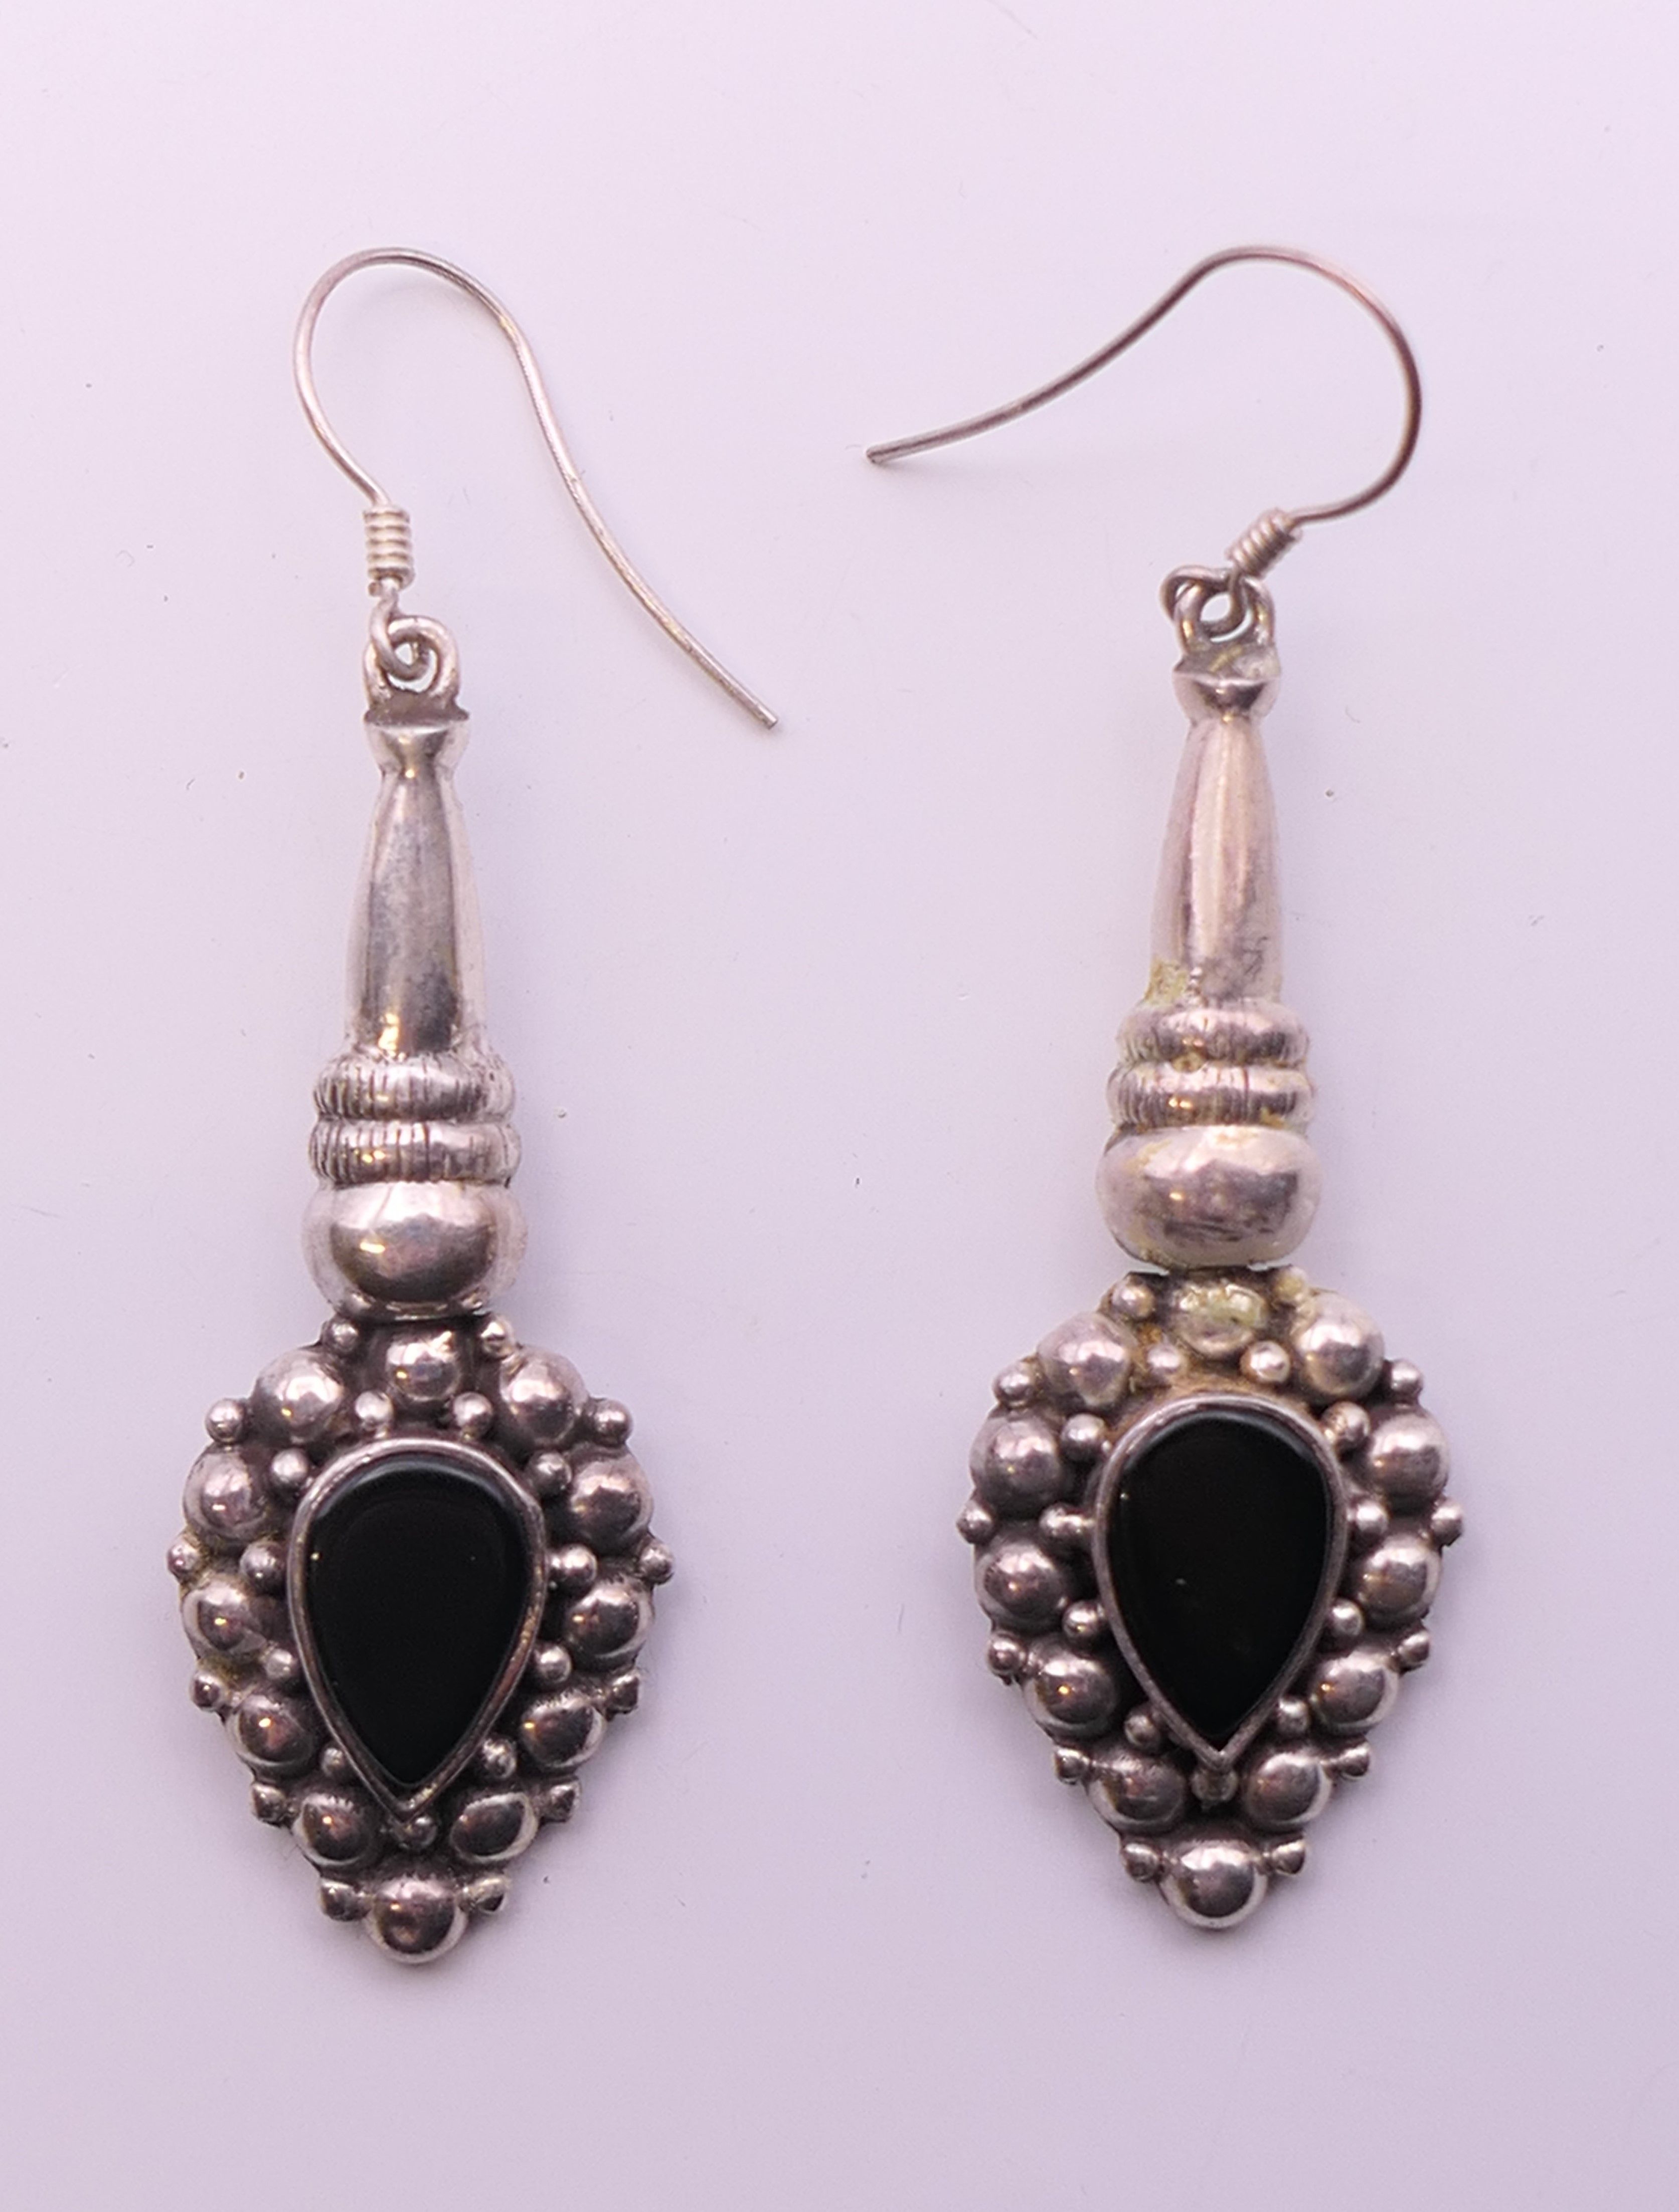 A pair of silver dress earrings. 4.5 cm high.